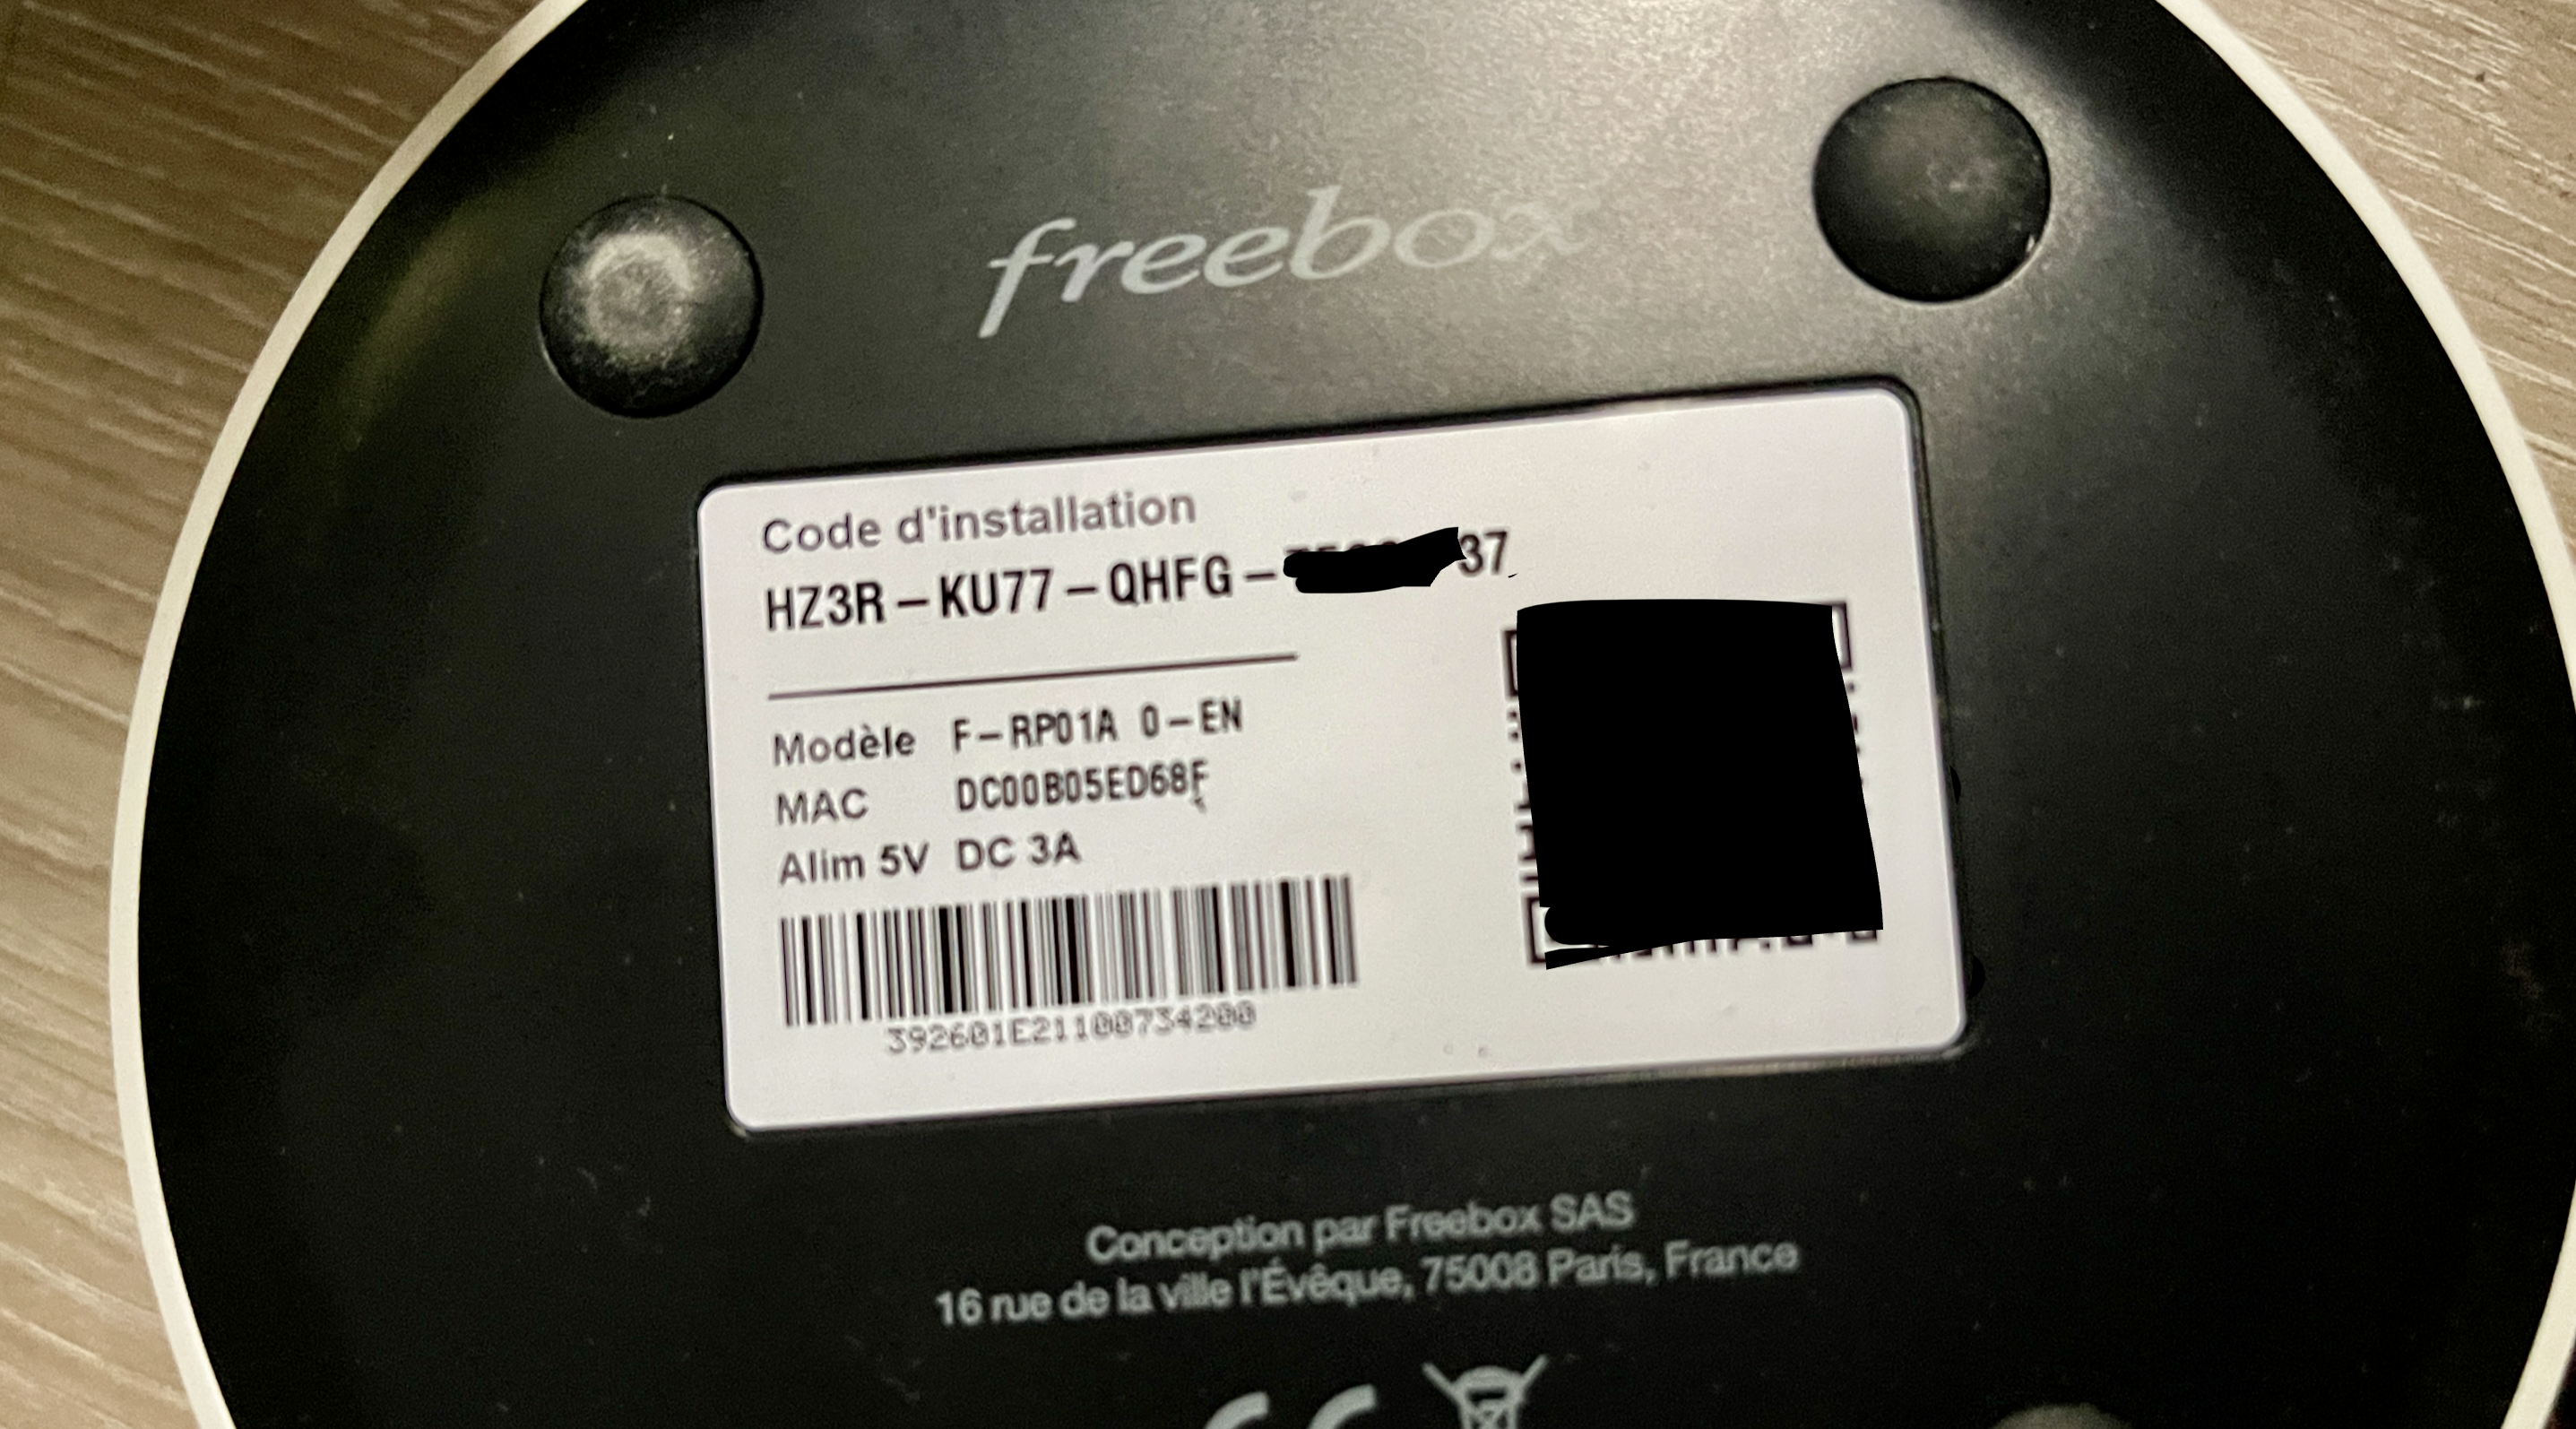 clé wifi freebox derrière la box